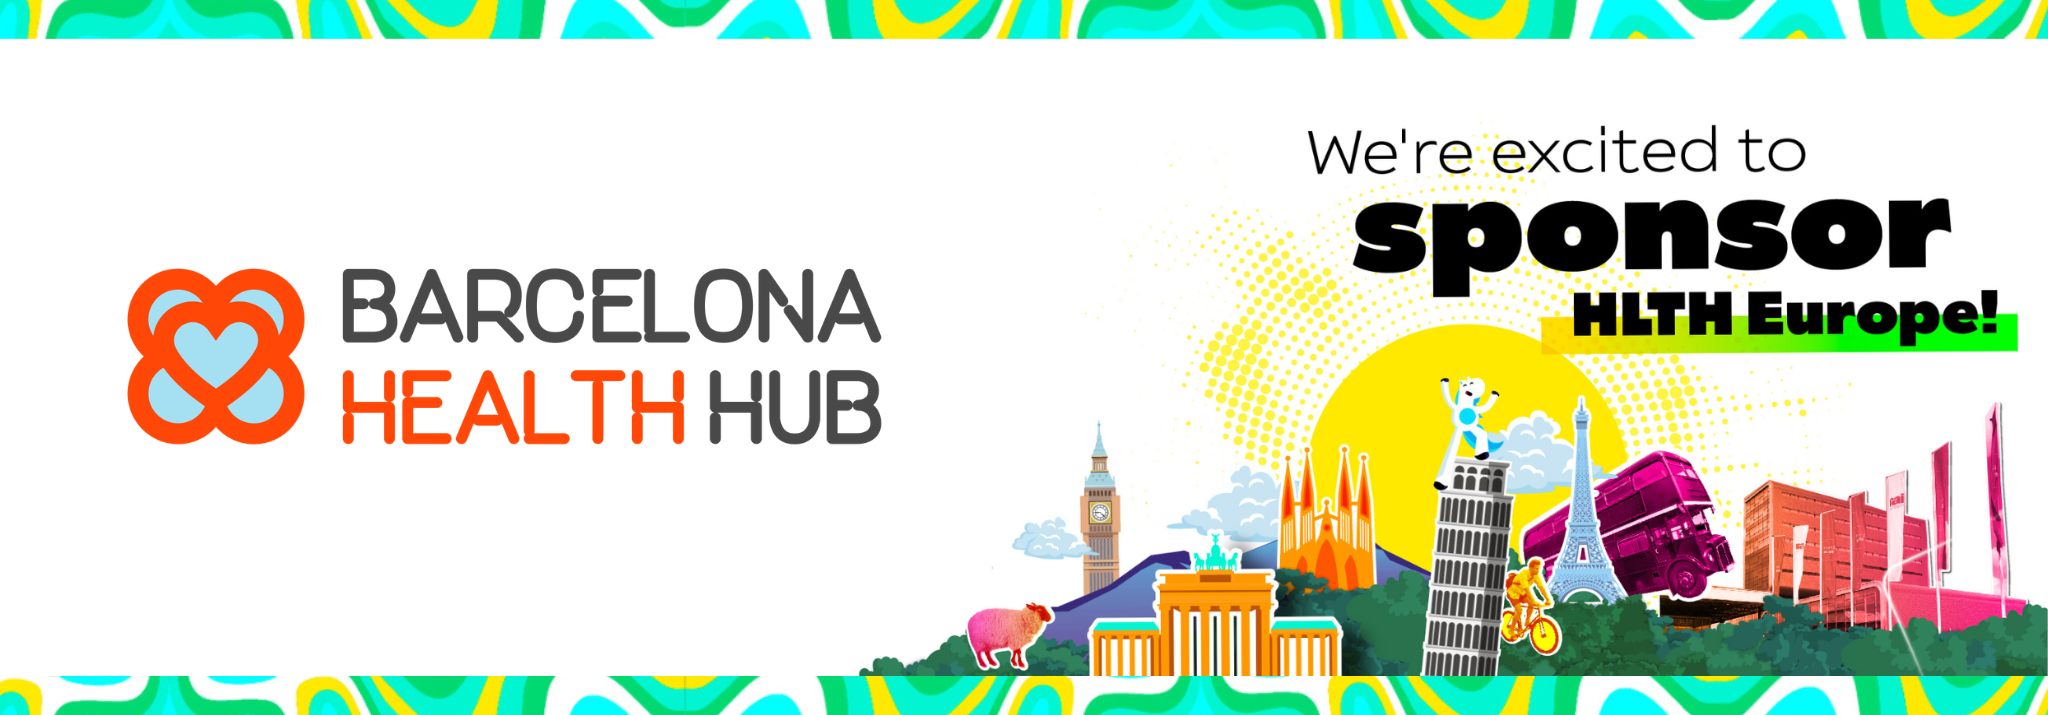 Go to HLTH Europe with Barcelona Health Hub